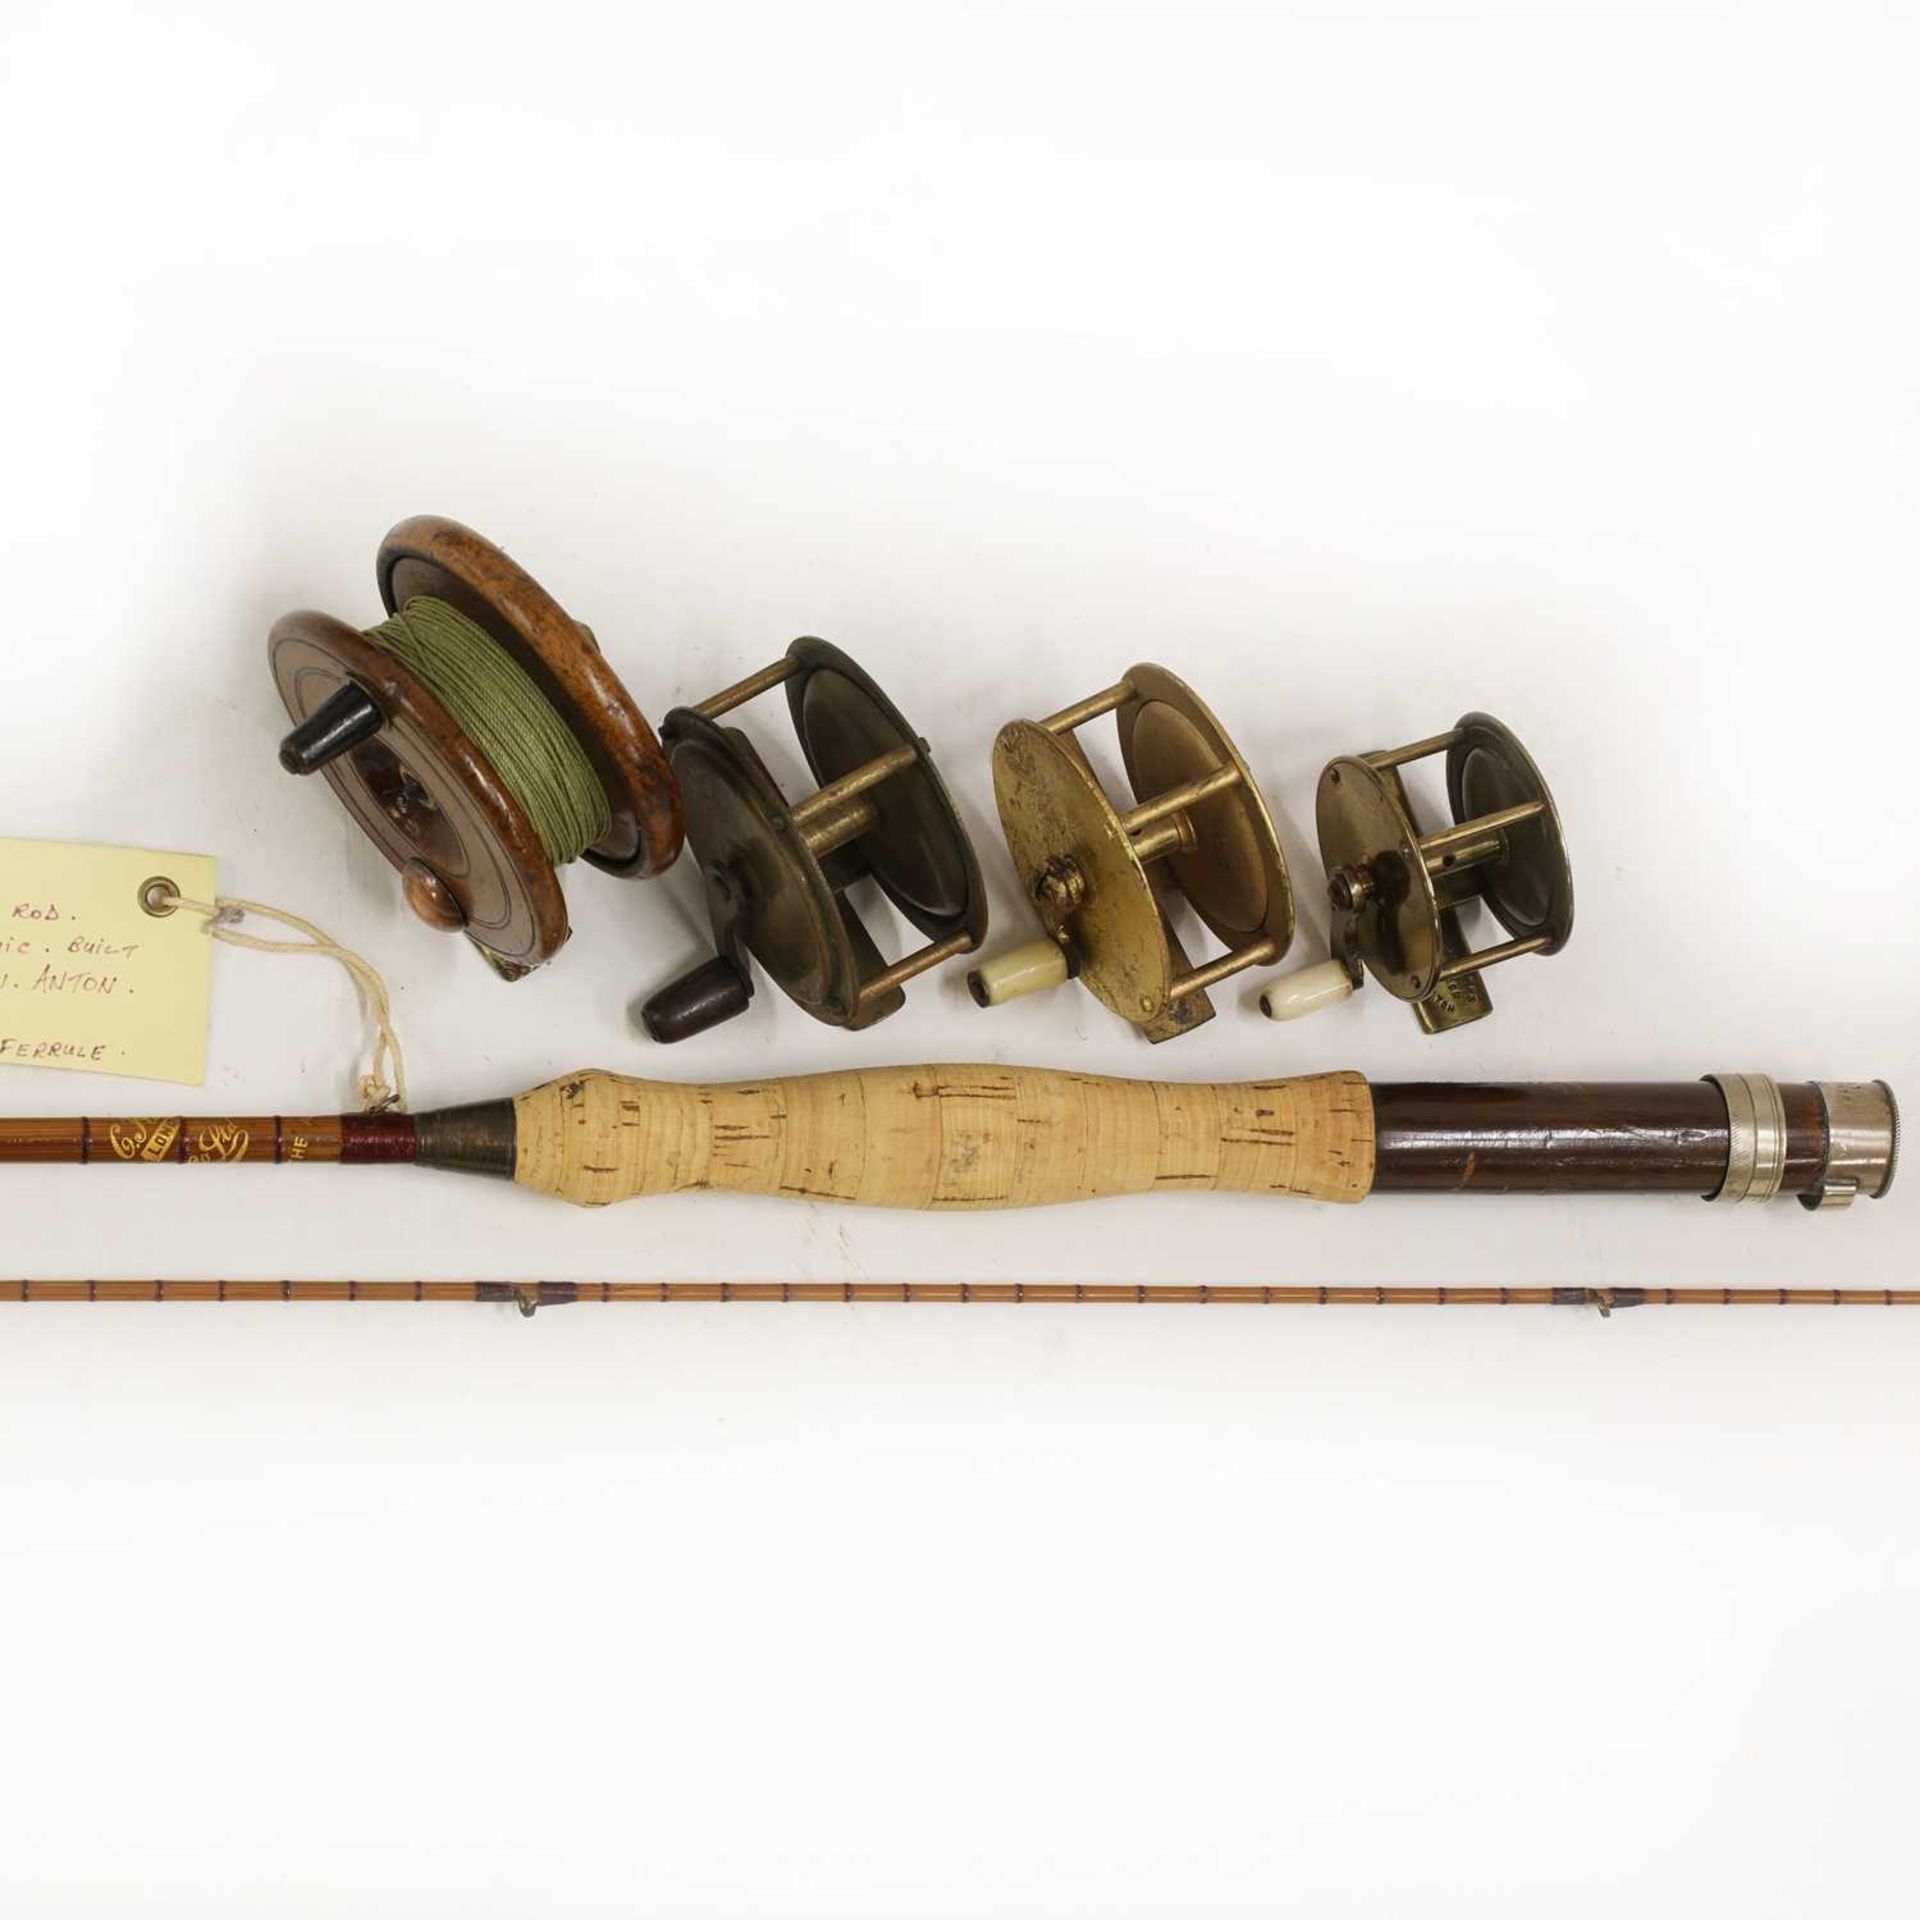 A Farlow & Co. London split cane fly fishing rod, - Image 3 of 3